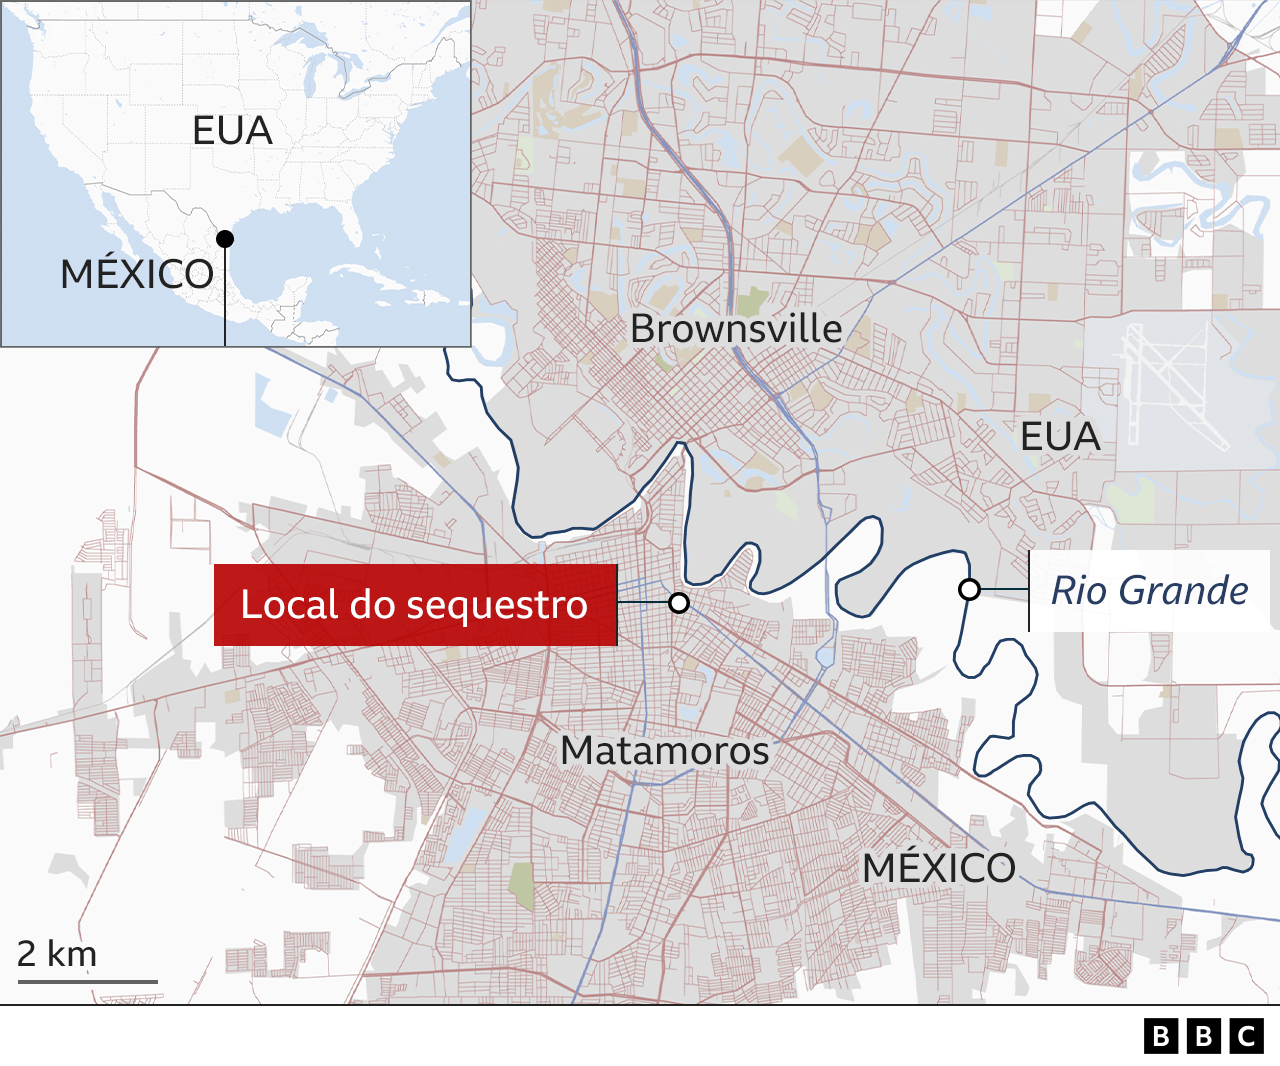 Mapa mostra local do sequestro no México